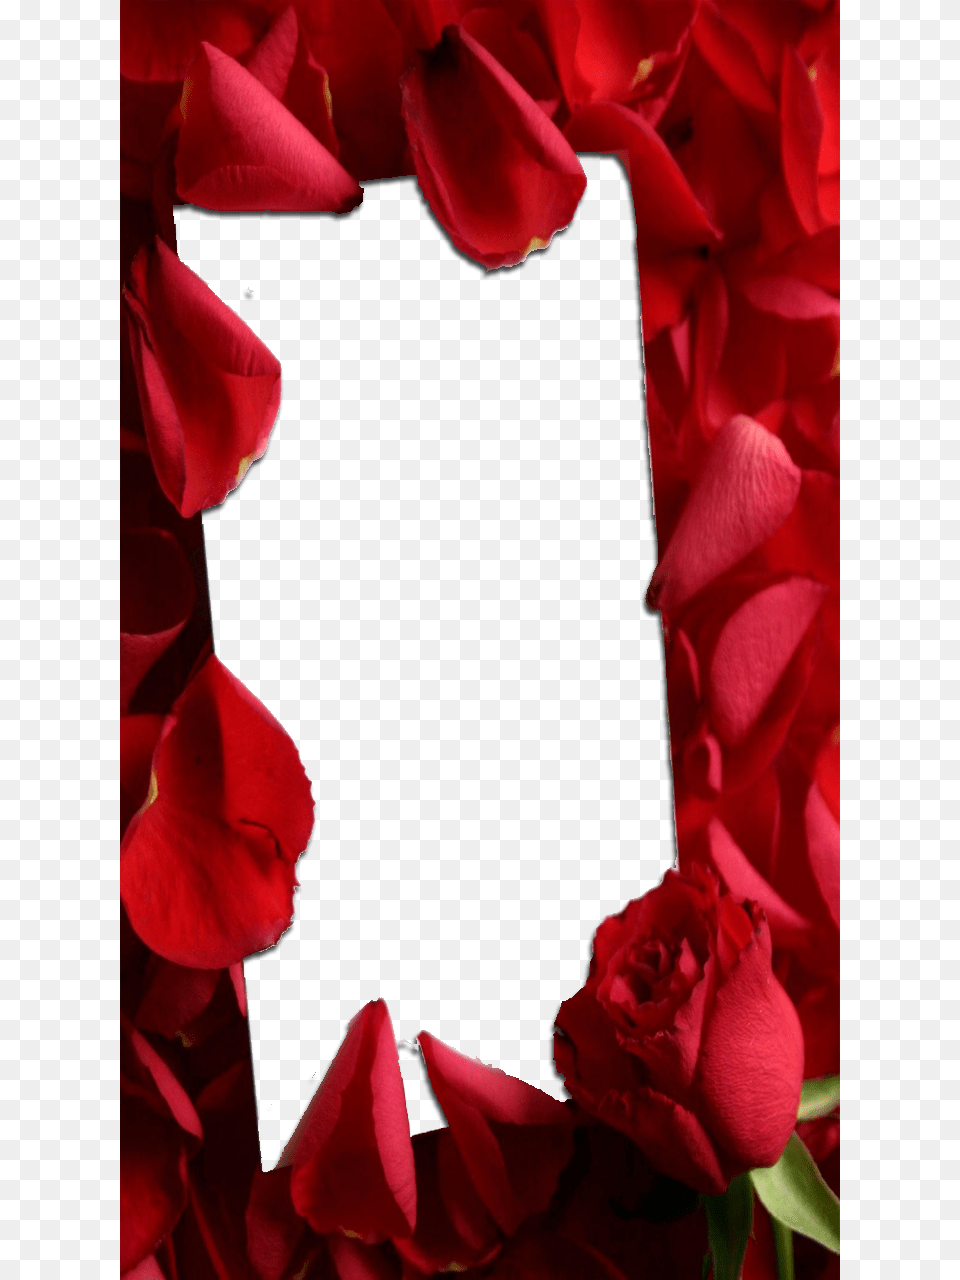 Love Frame With Red Roses Red Roses Frames, Flower, Petal, Plant, Rose Png